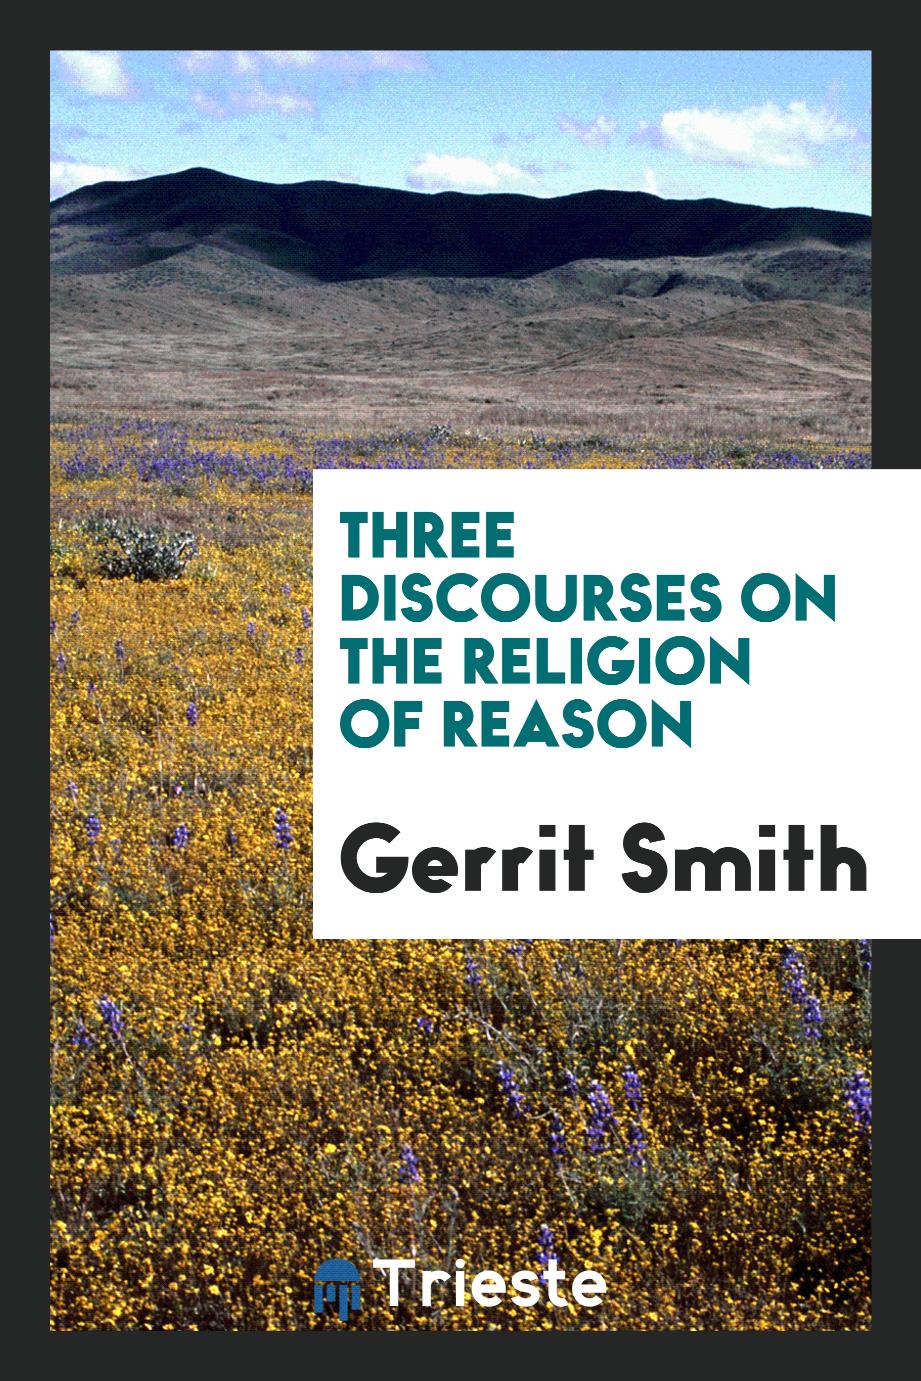 Three discourses on the religion of reason